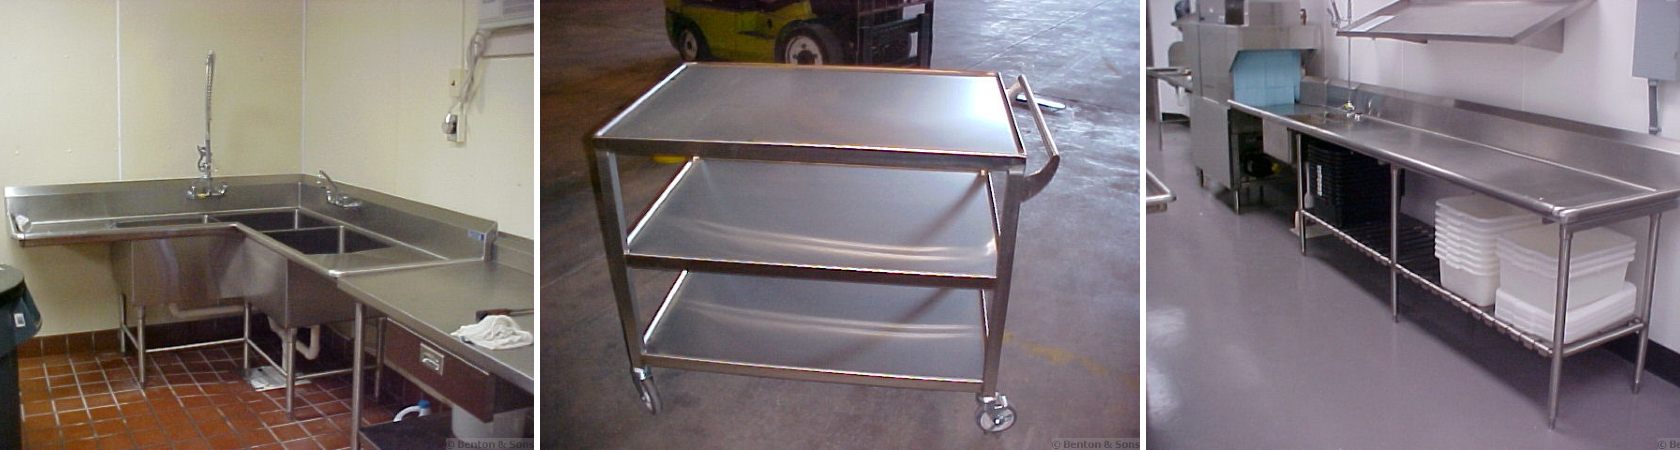 Custom Stainless Steel Kitchen Equipment